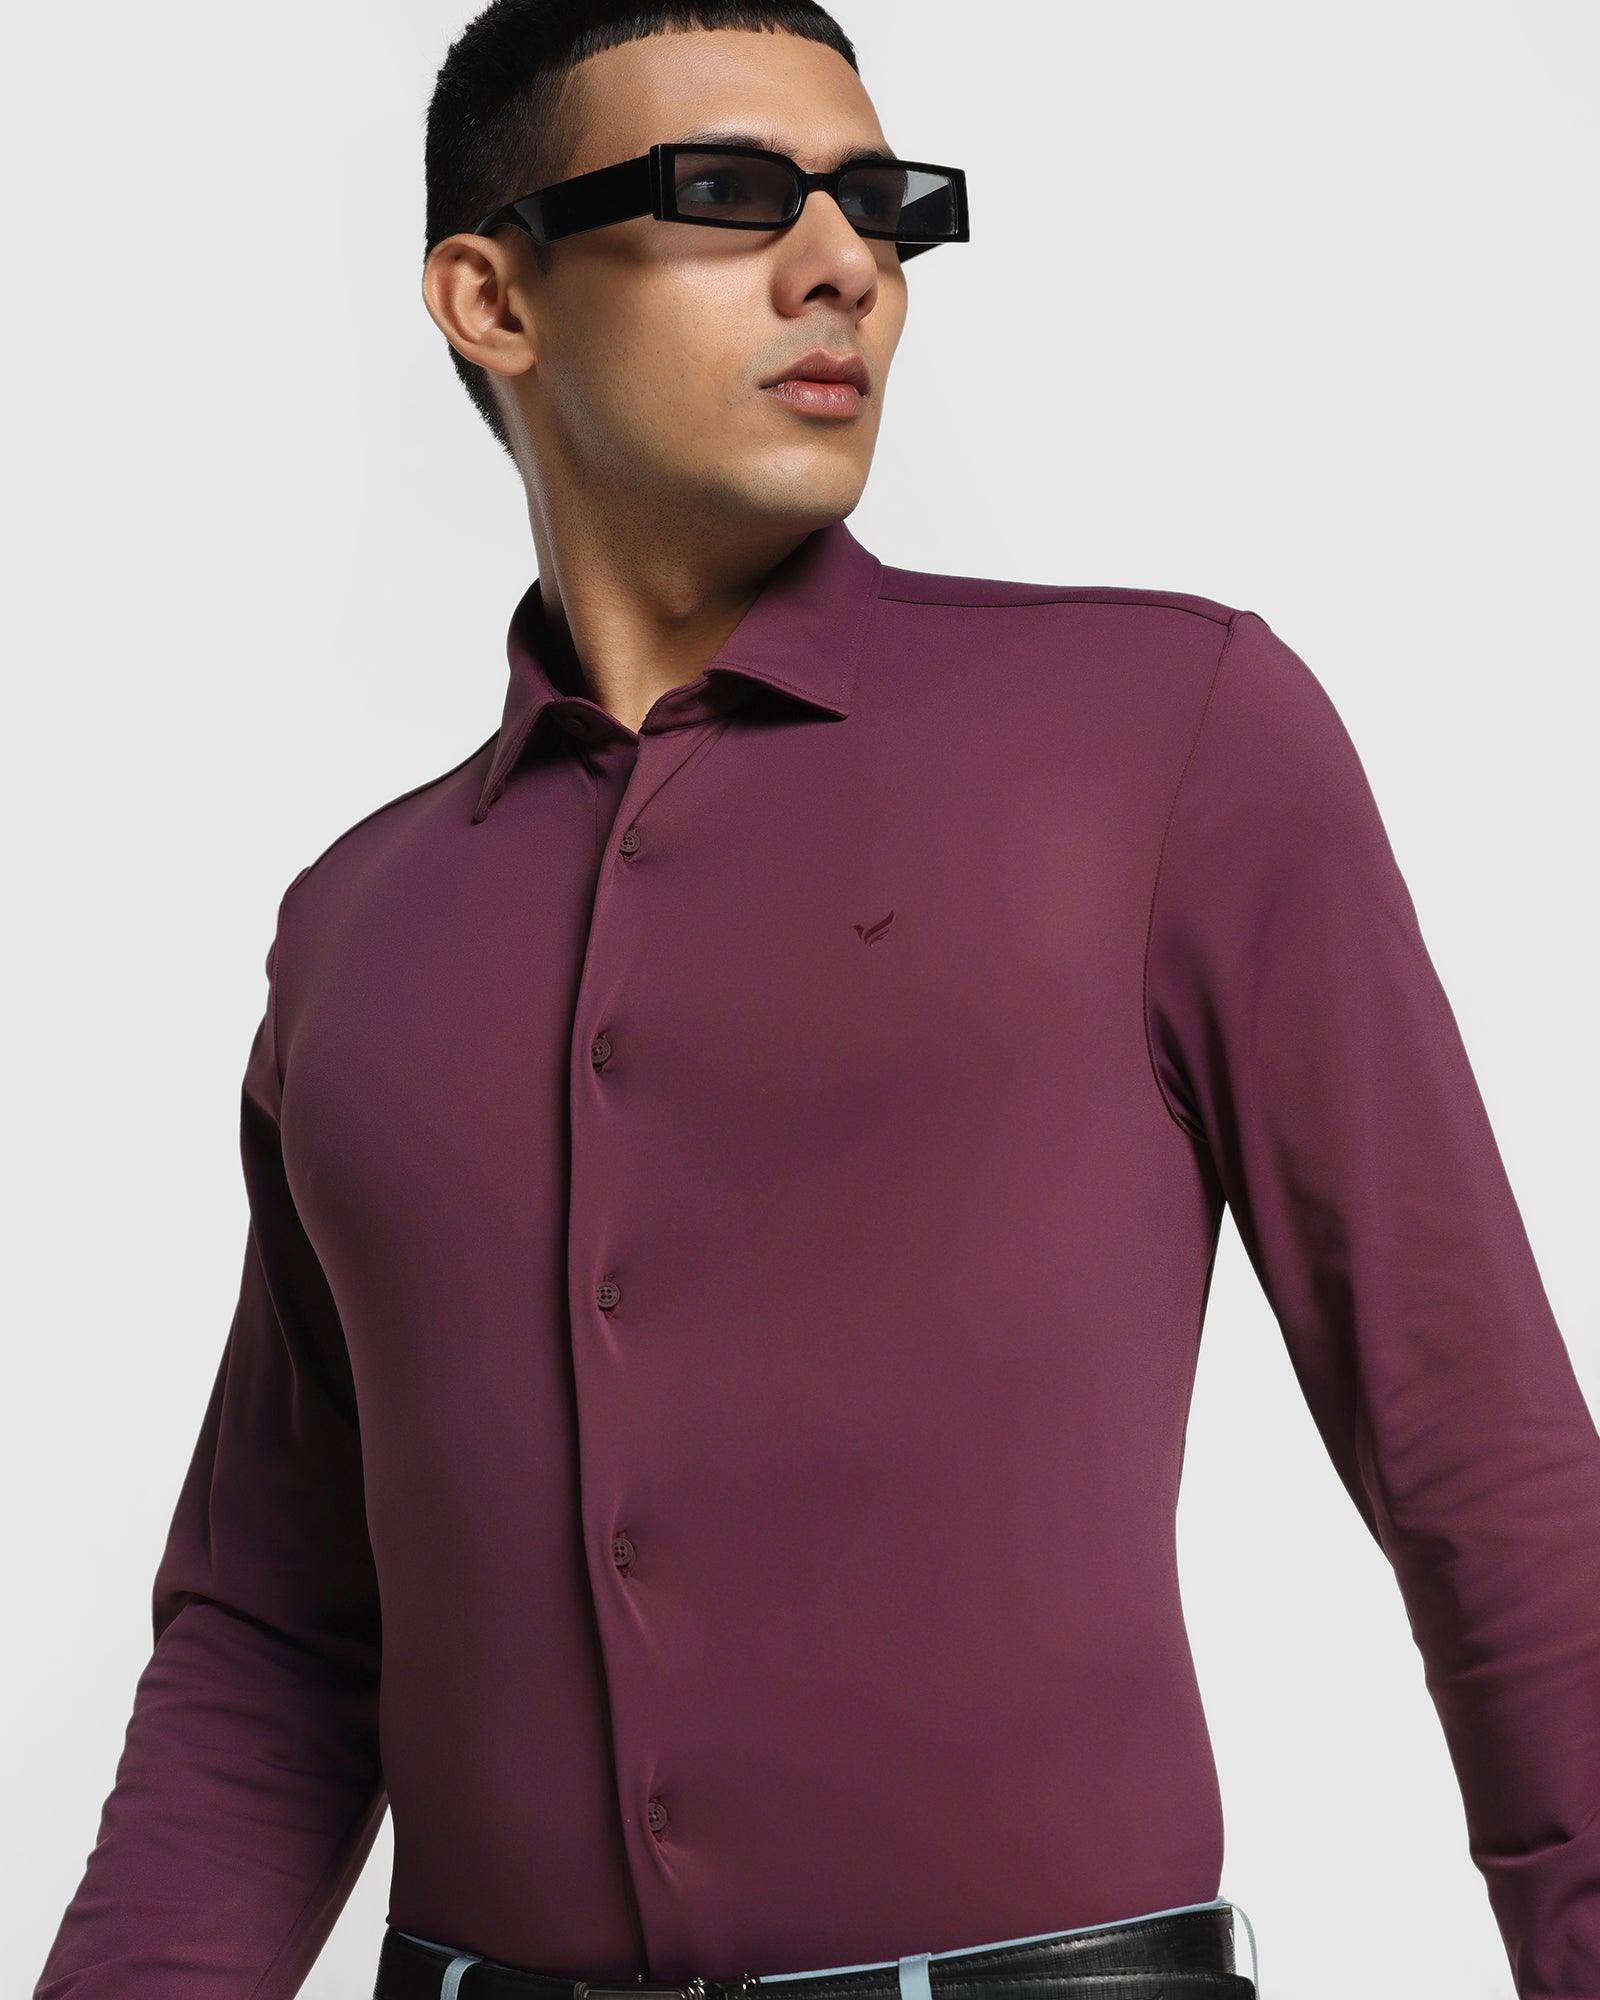 TechPro Formal Plum Solid Shirt - Admin